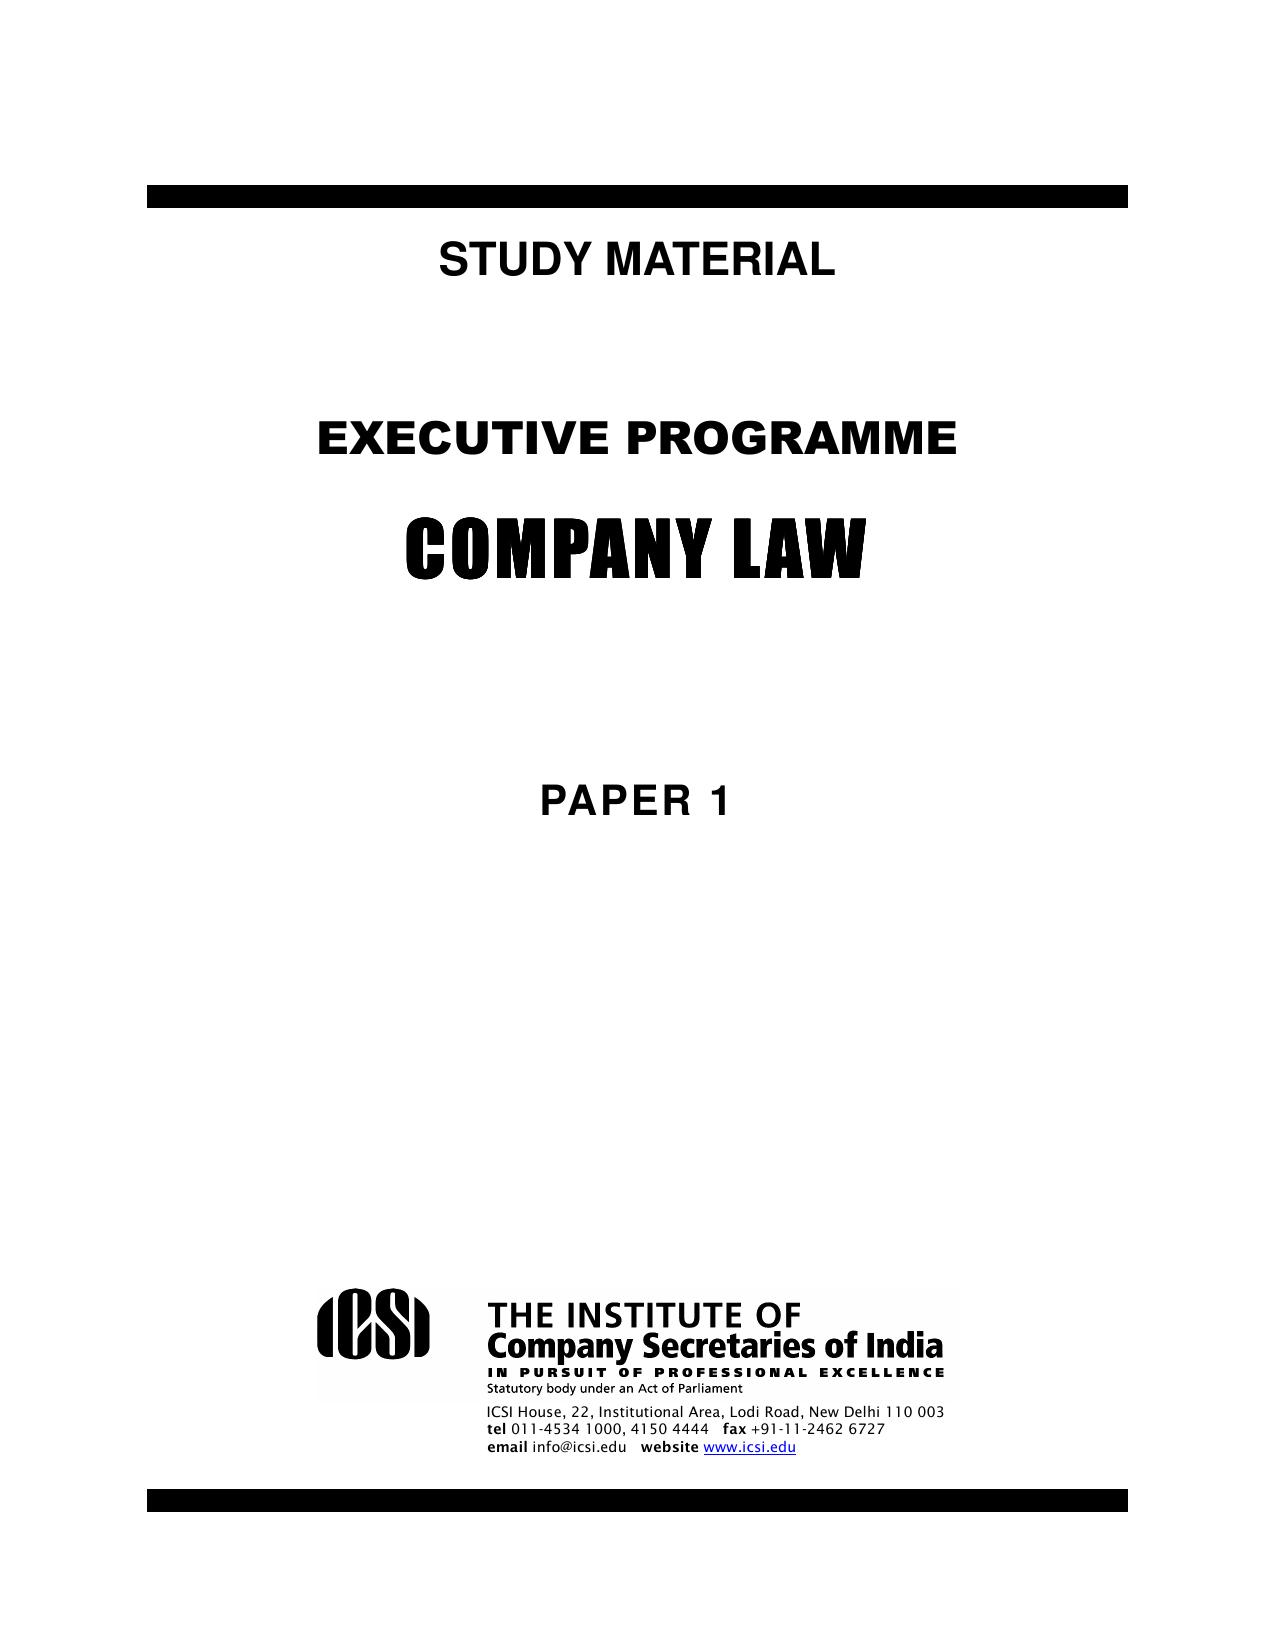 Company Law Executive  Study Material 2014